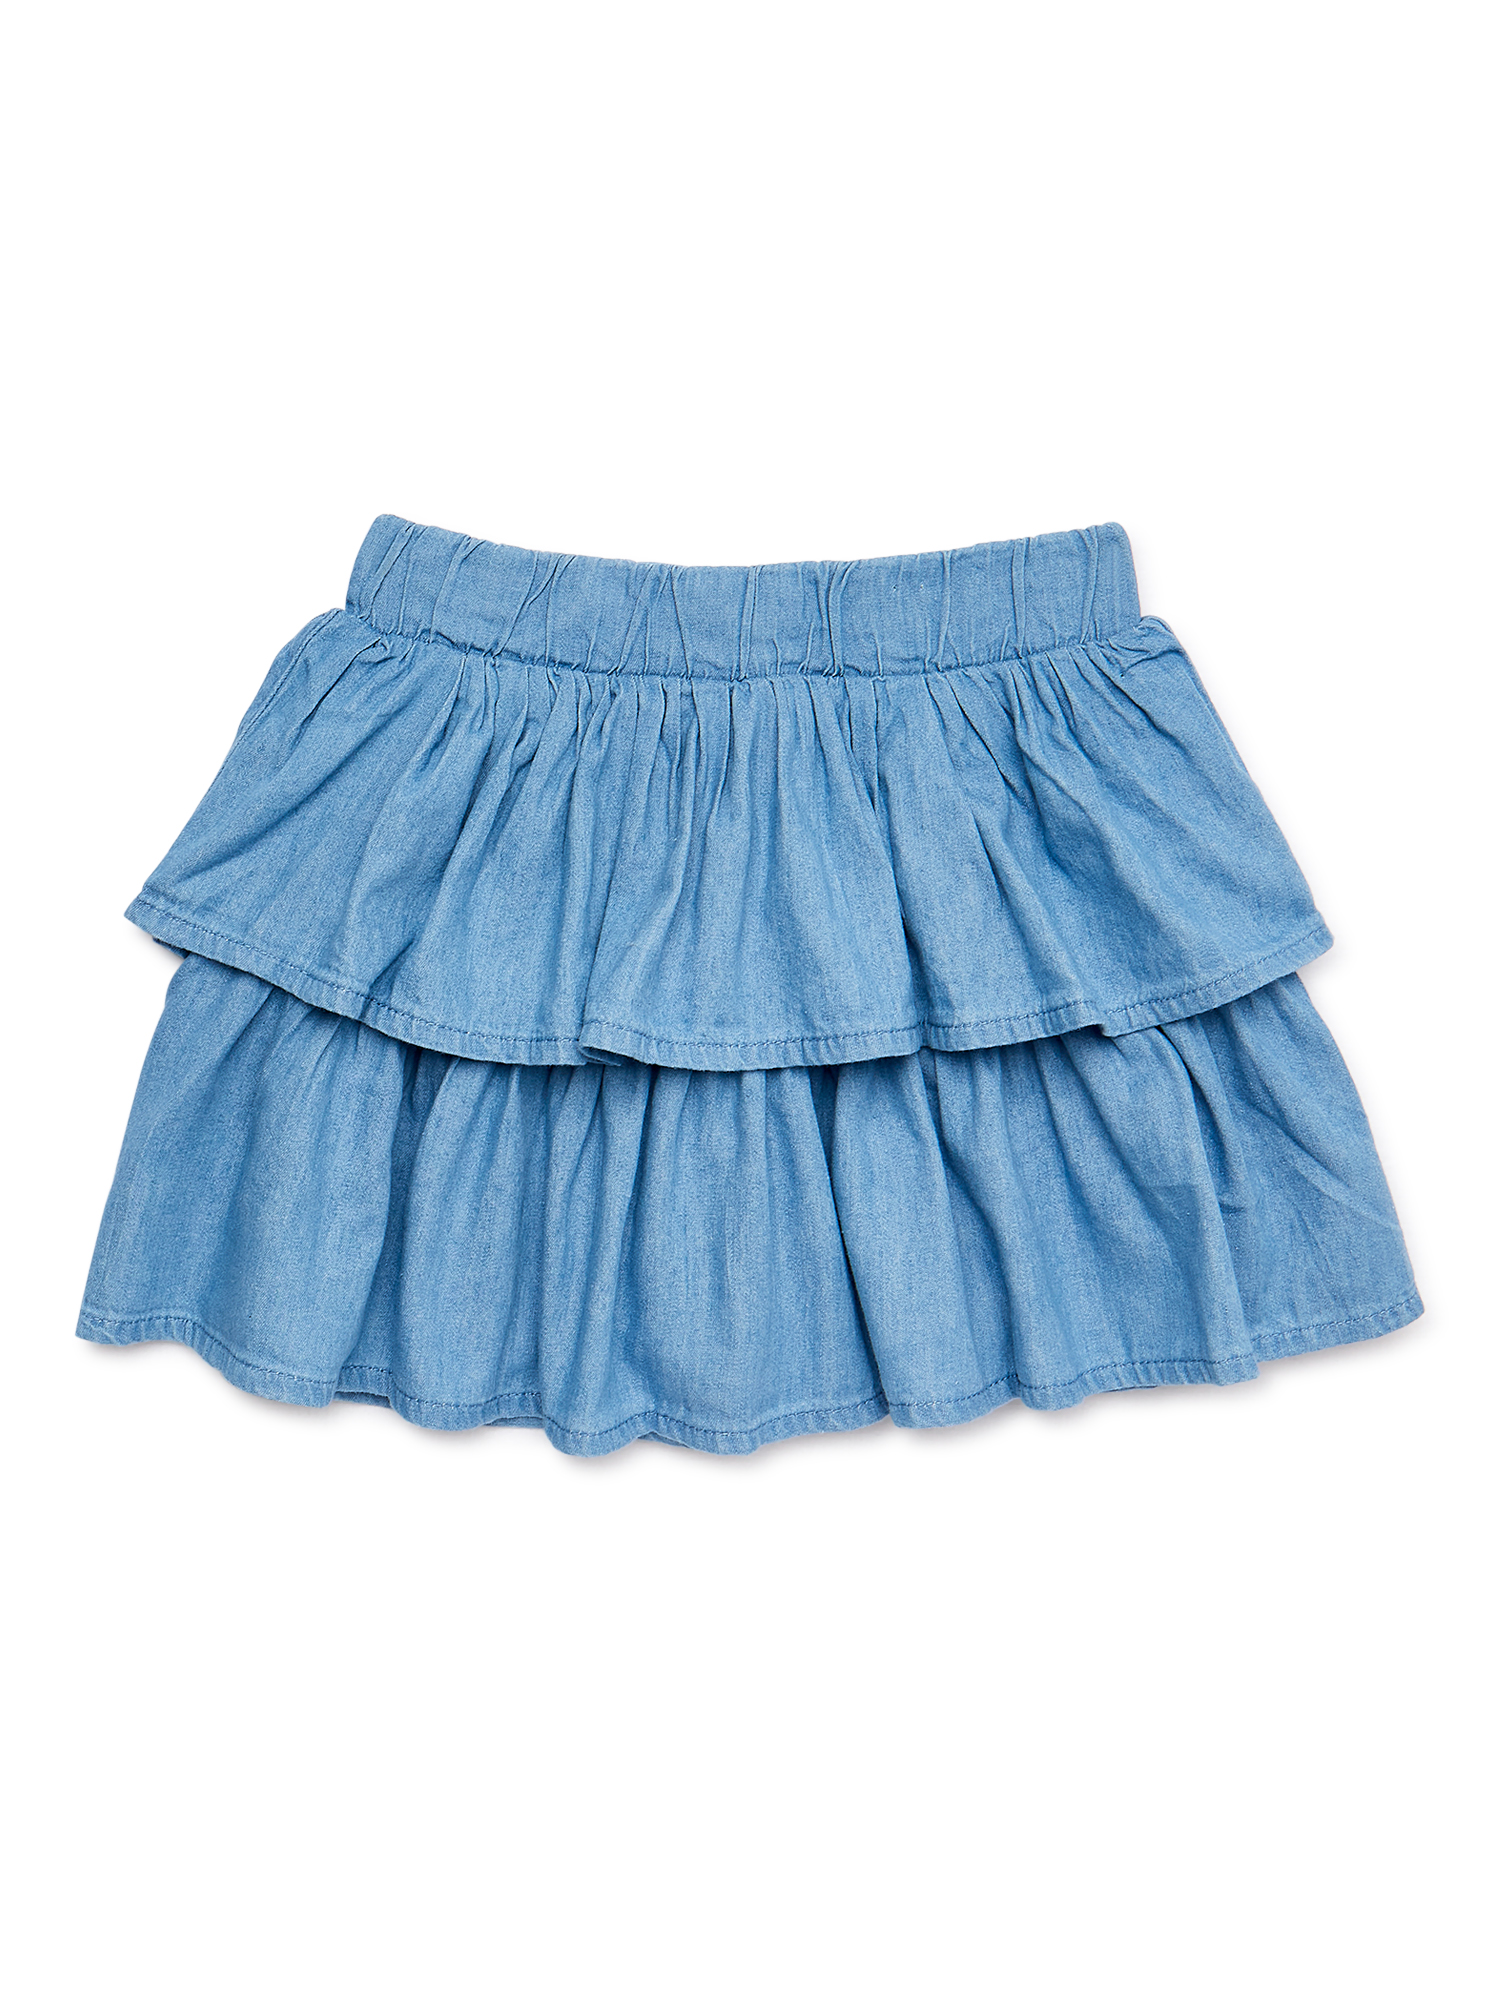 Garanimals Baby and Toddler Girls Tiered Skirt, Sizes 12M-5T - image 1 of 3